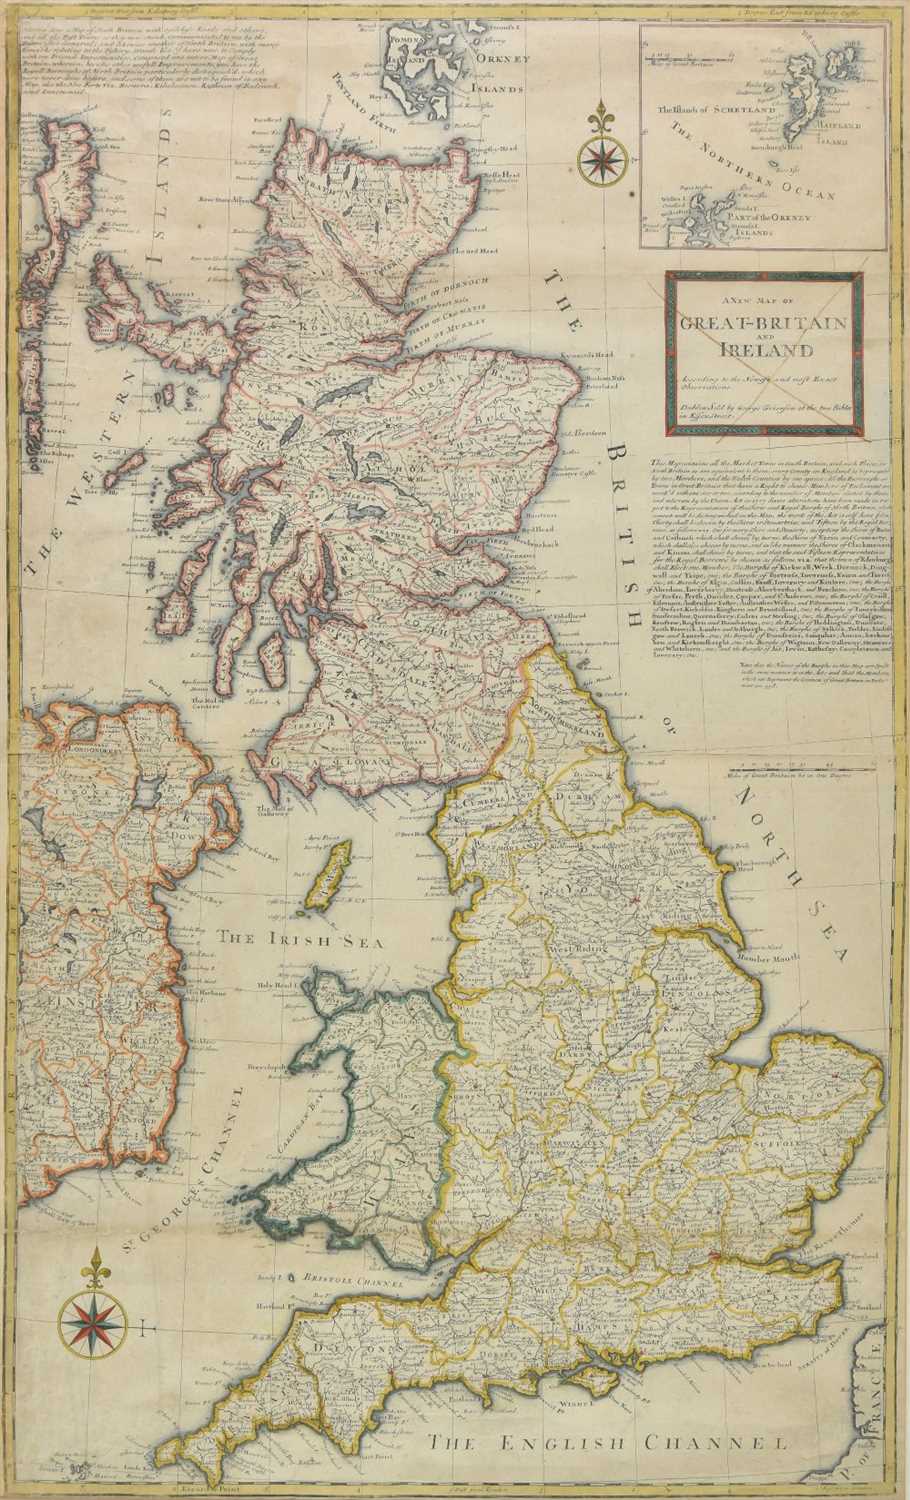 Lot 157 - British Isles. Grierson (George), c.1733